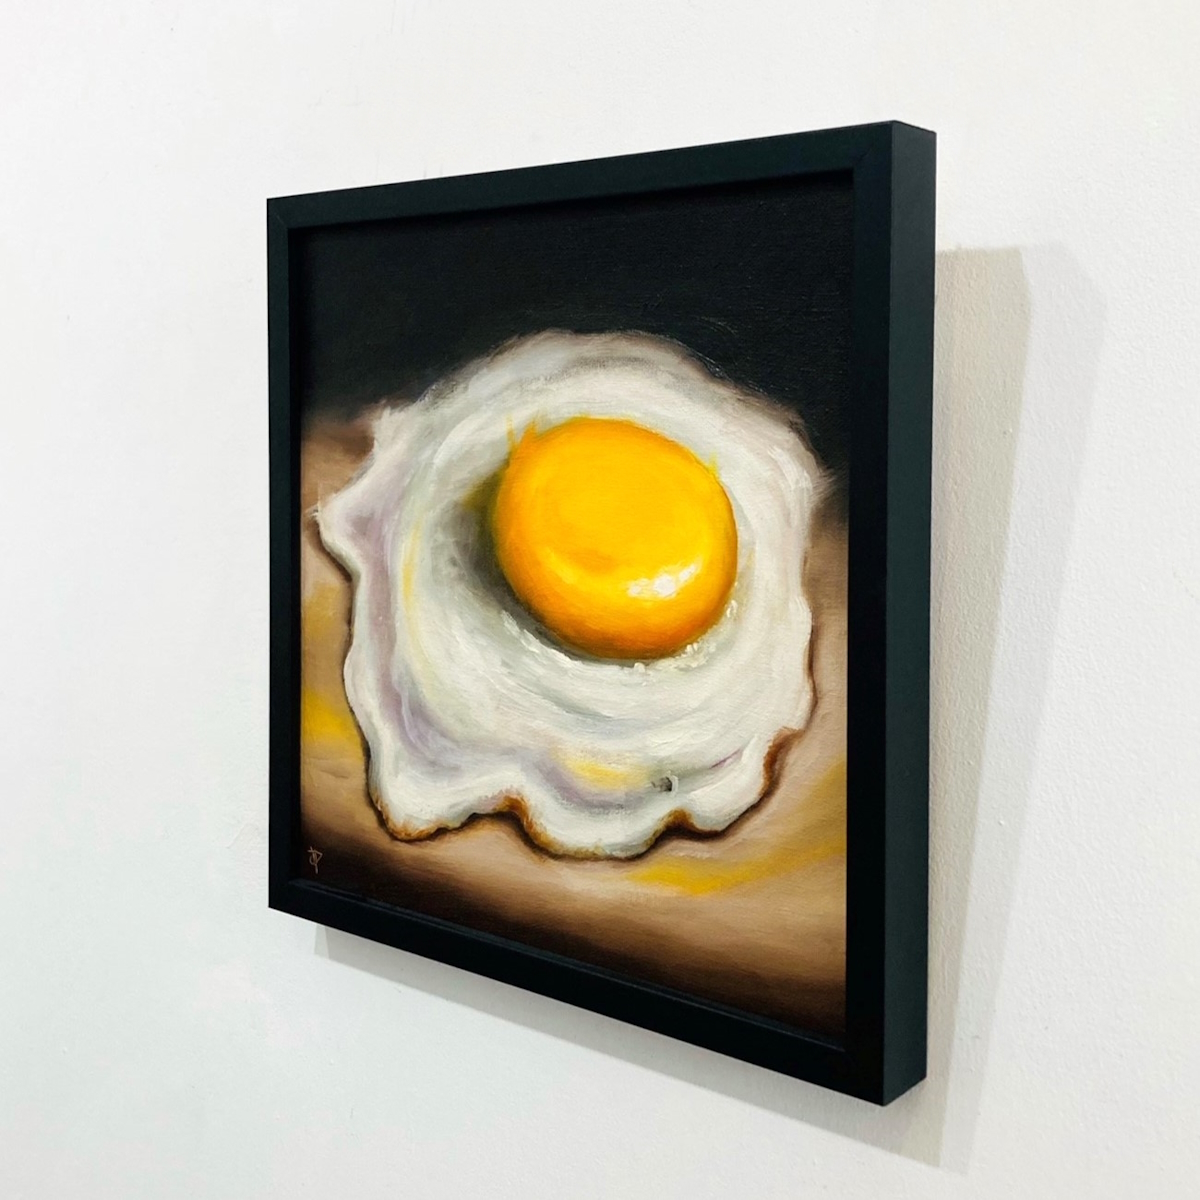 'Big Fried Egg' by artist Jane Palmer